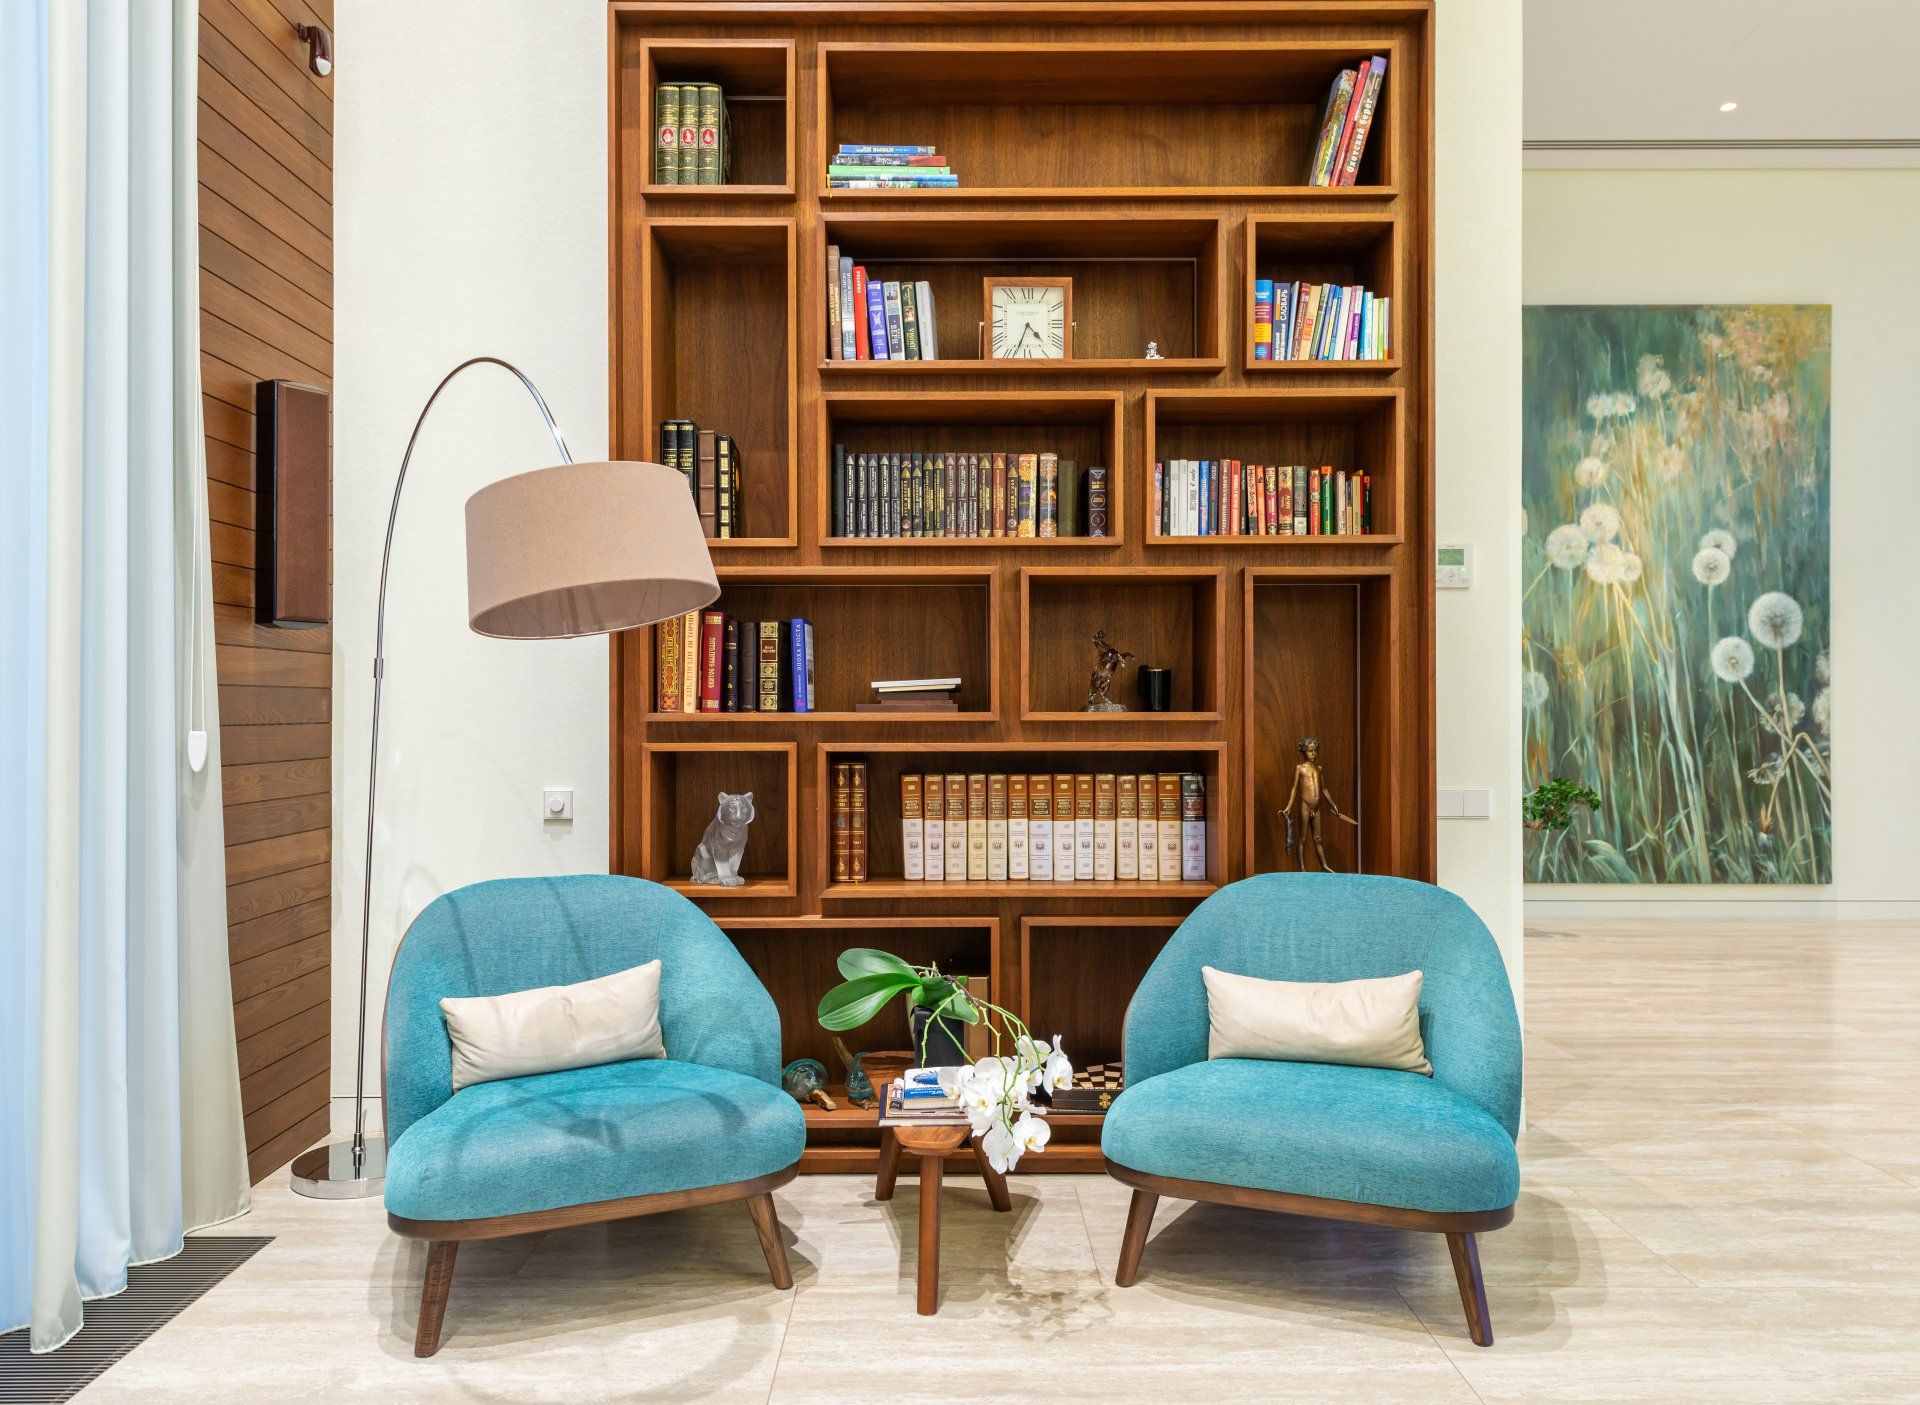 Organized home cozy living room styled bookshelf